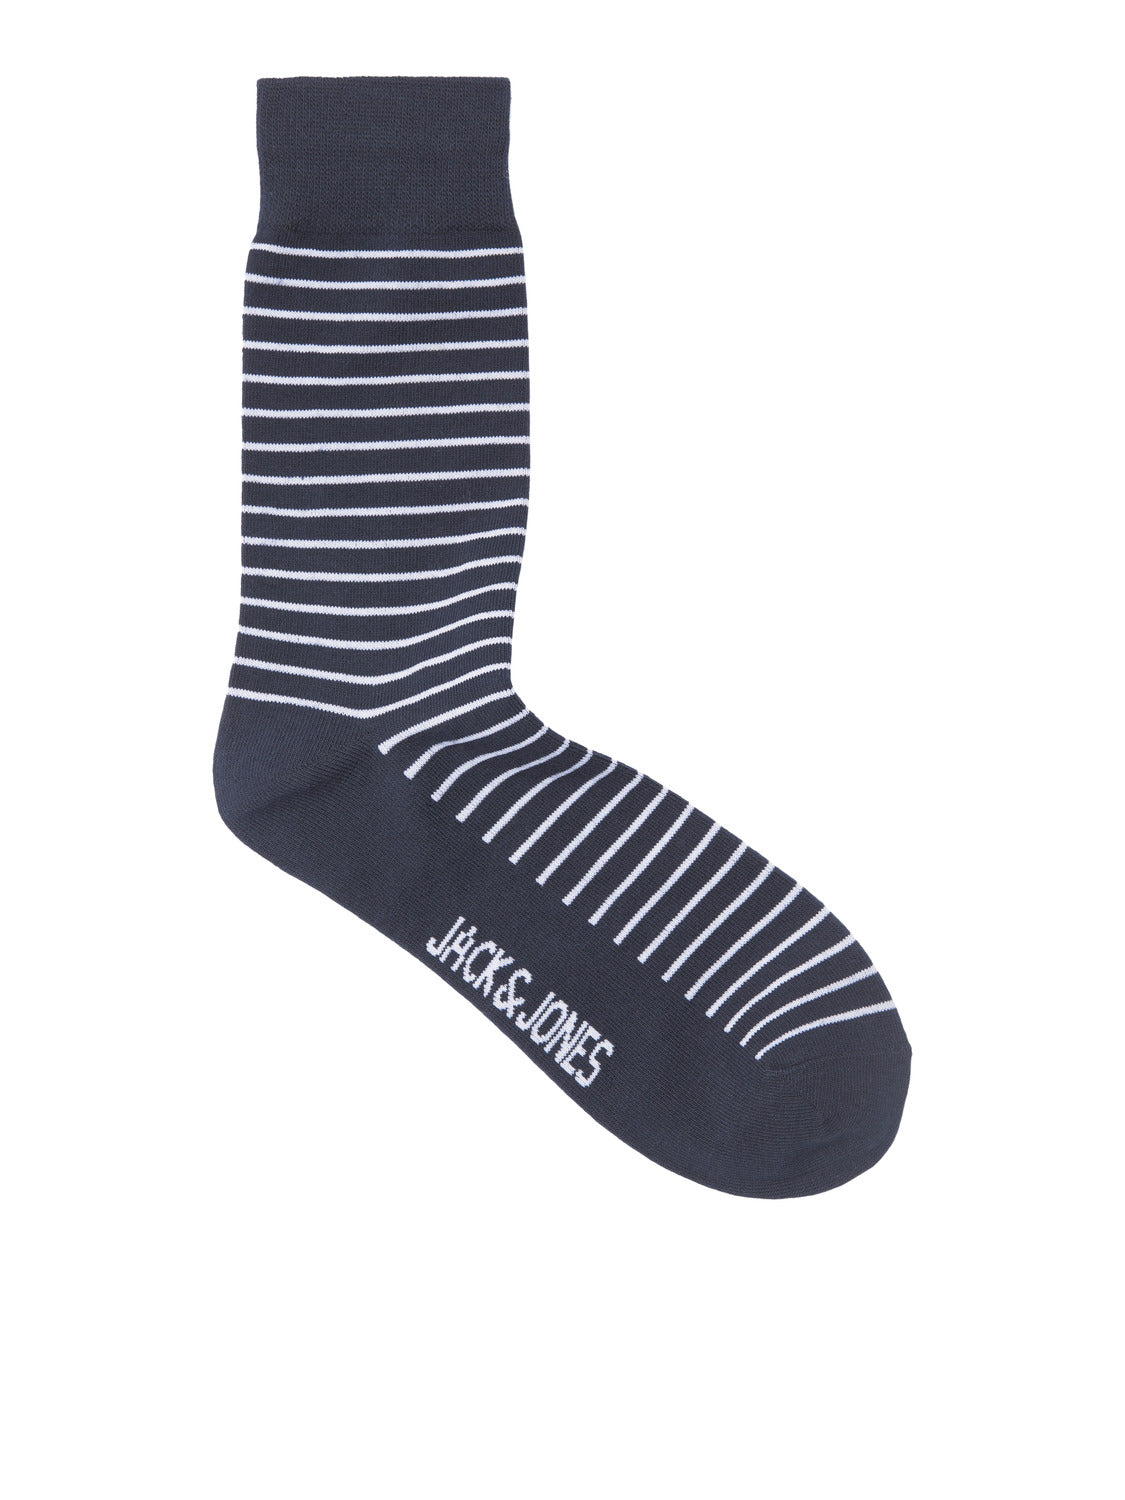 JACFINN Socks - Navy Blazer